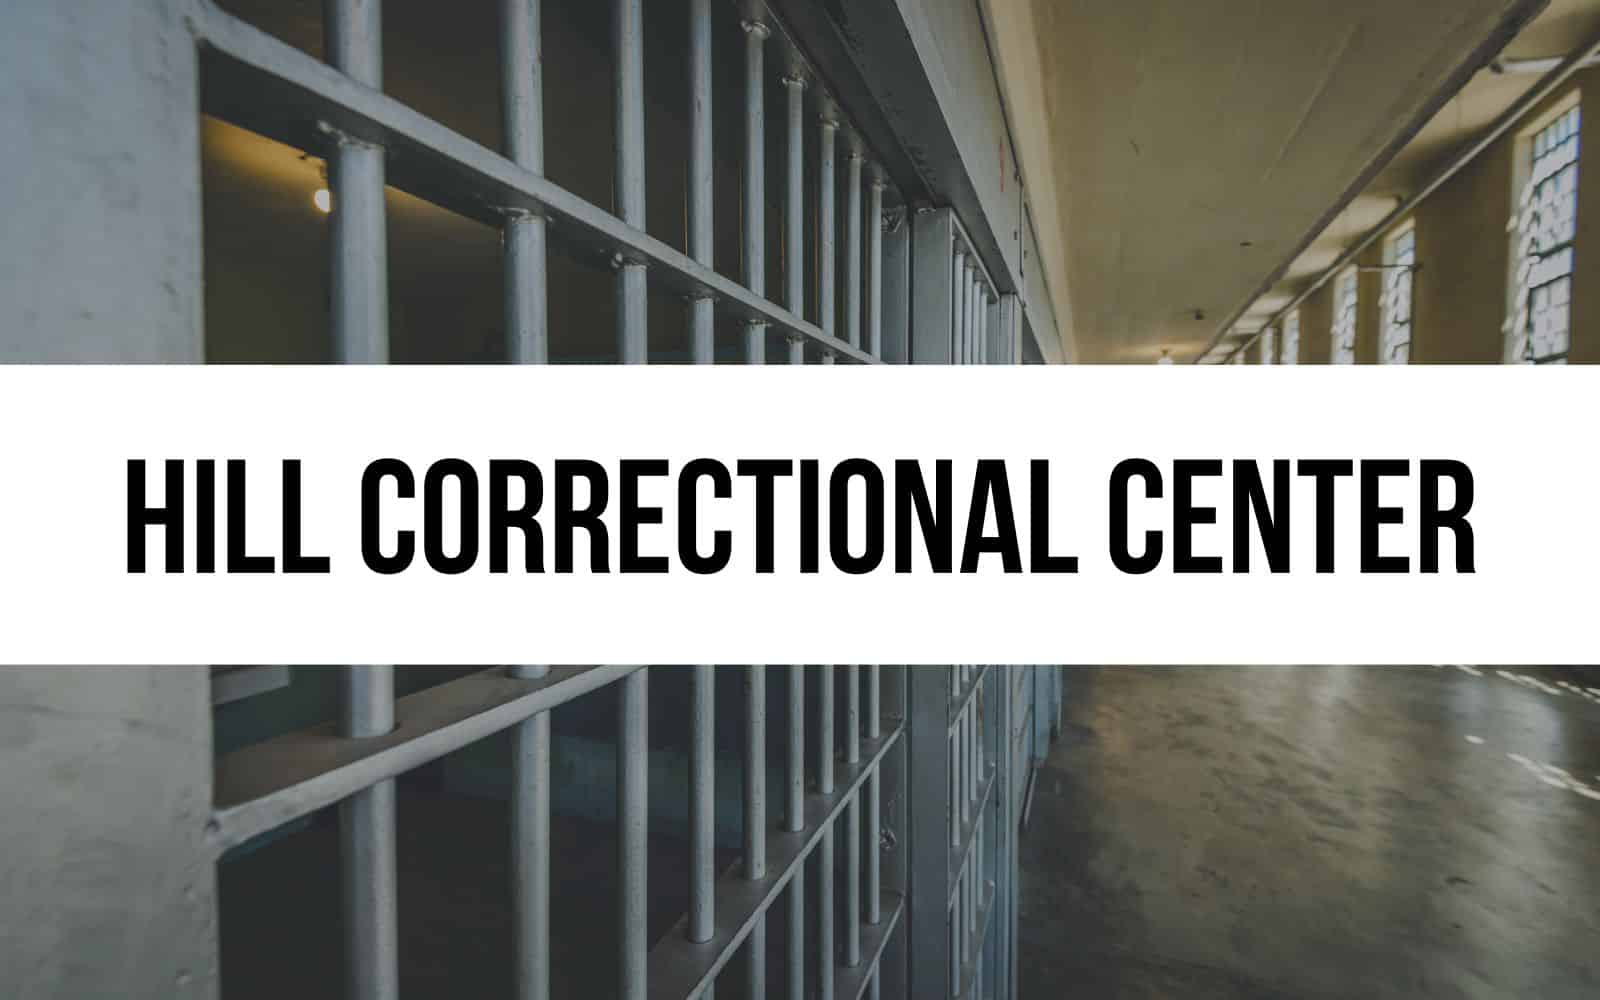 Hill Correctional Center